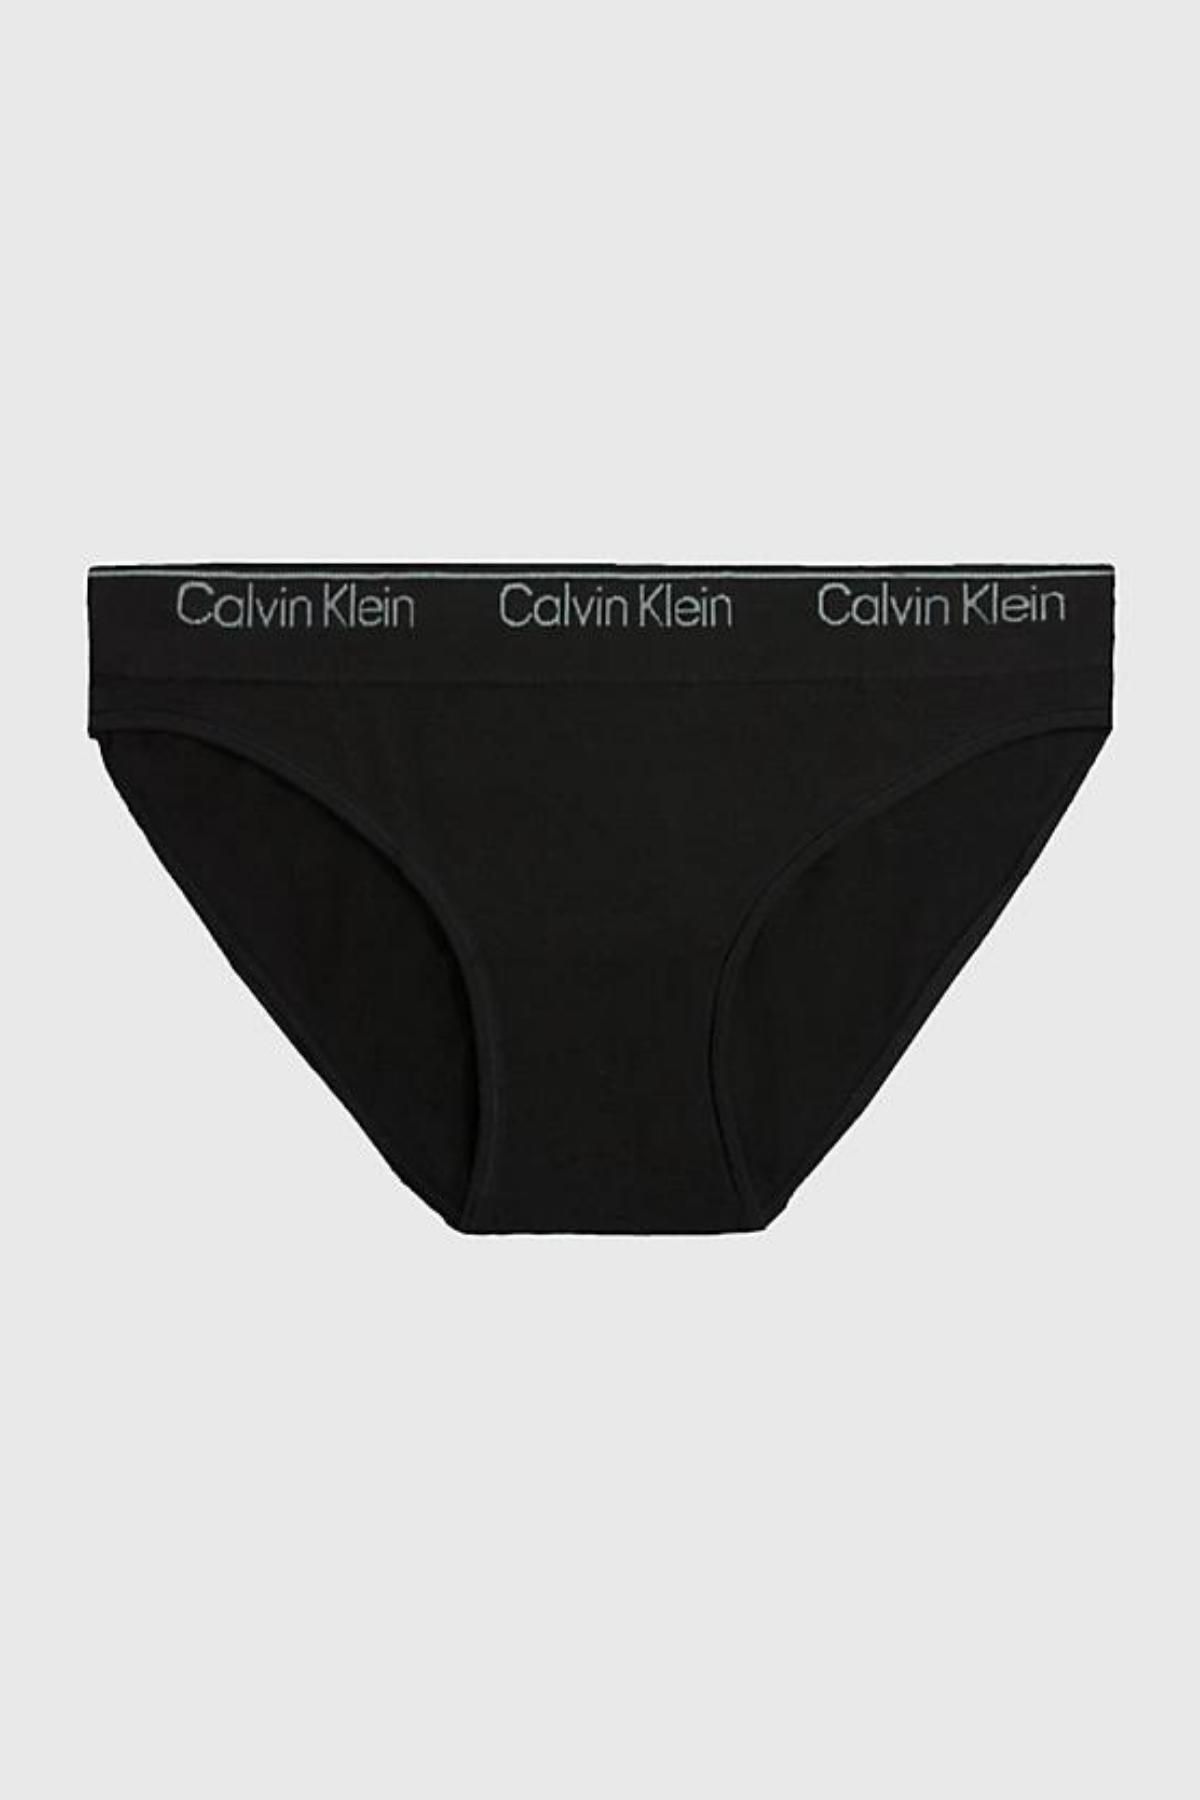 Calvin Klein Kadın Imzalı Elastik Bantlı Siyah Külot 000qf7096e-ub1